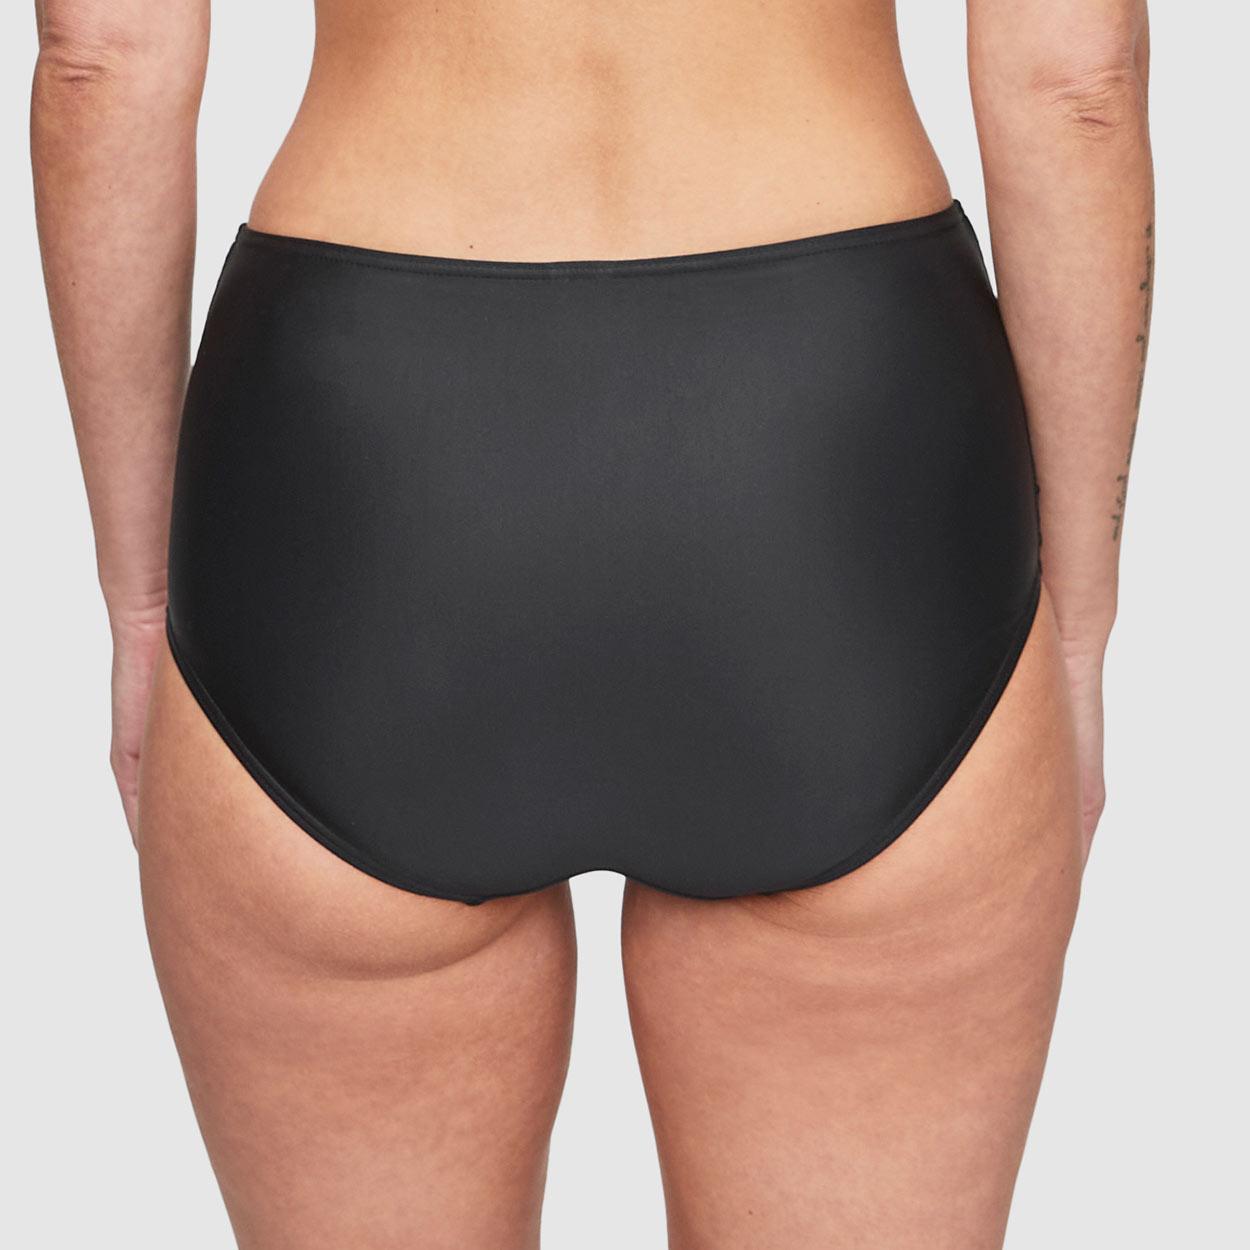 Abecita Bikini-Maxislip Modell Capri in Farbe schwarz am Modell in der Rückansicht